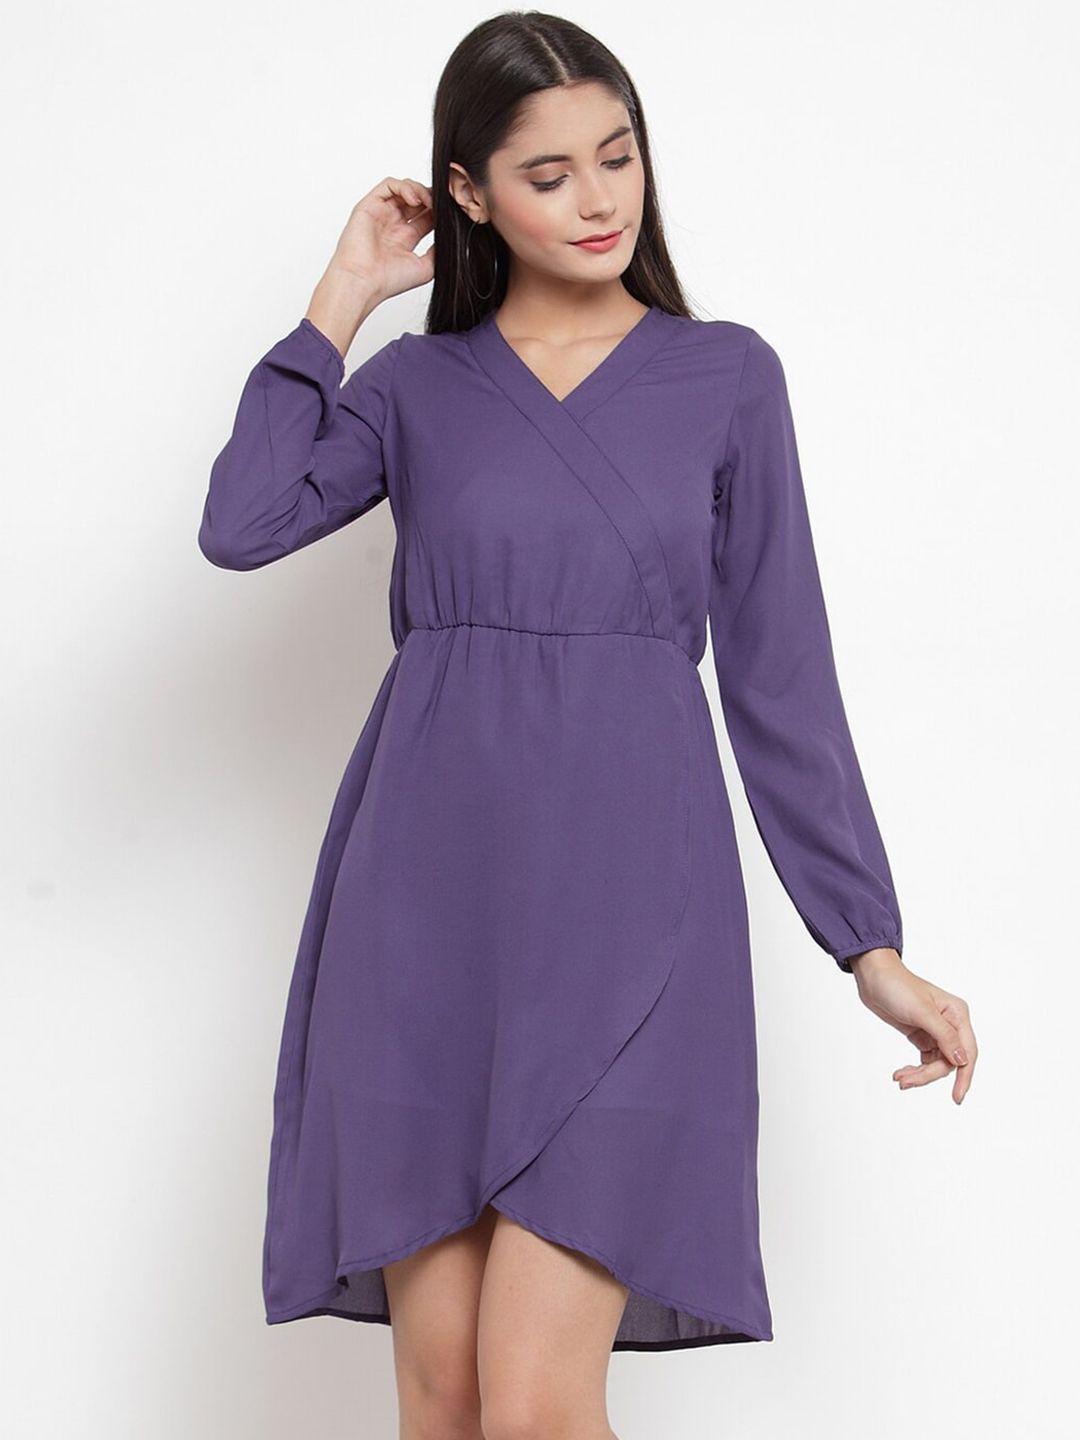 magnetic designs purple crepe dress